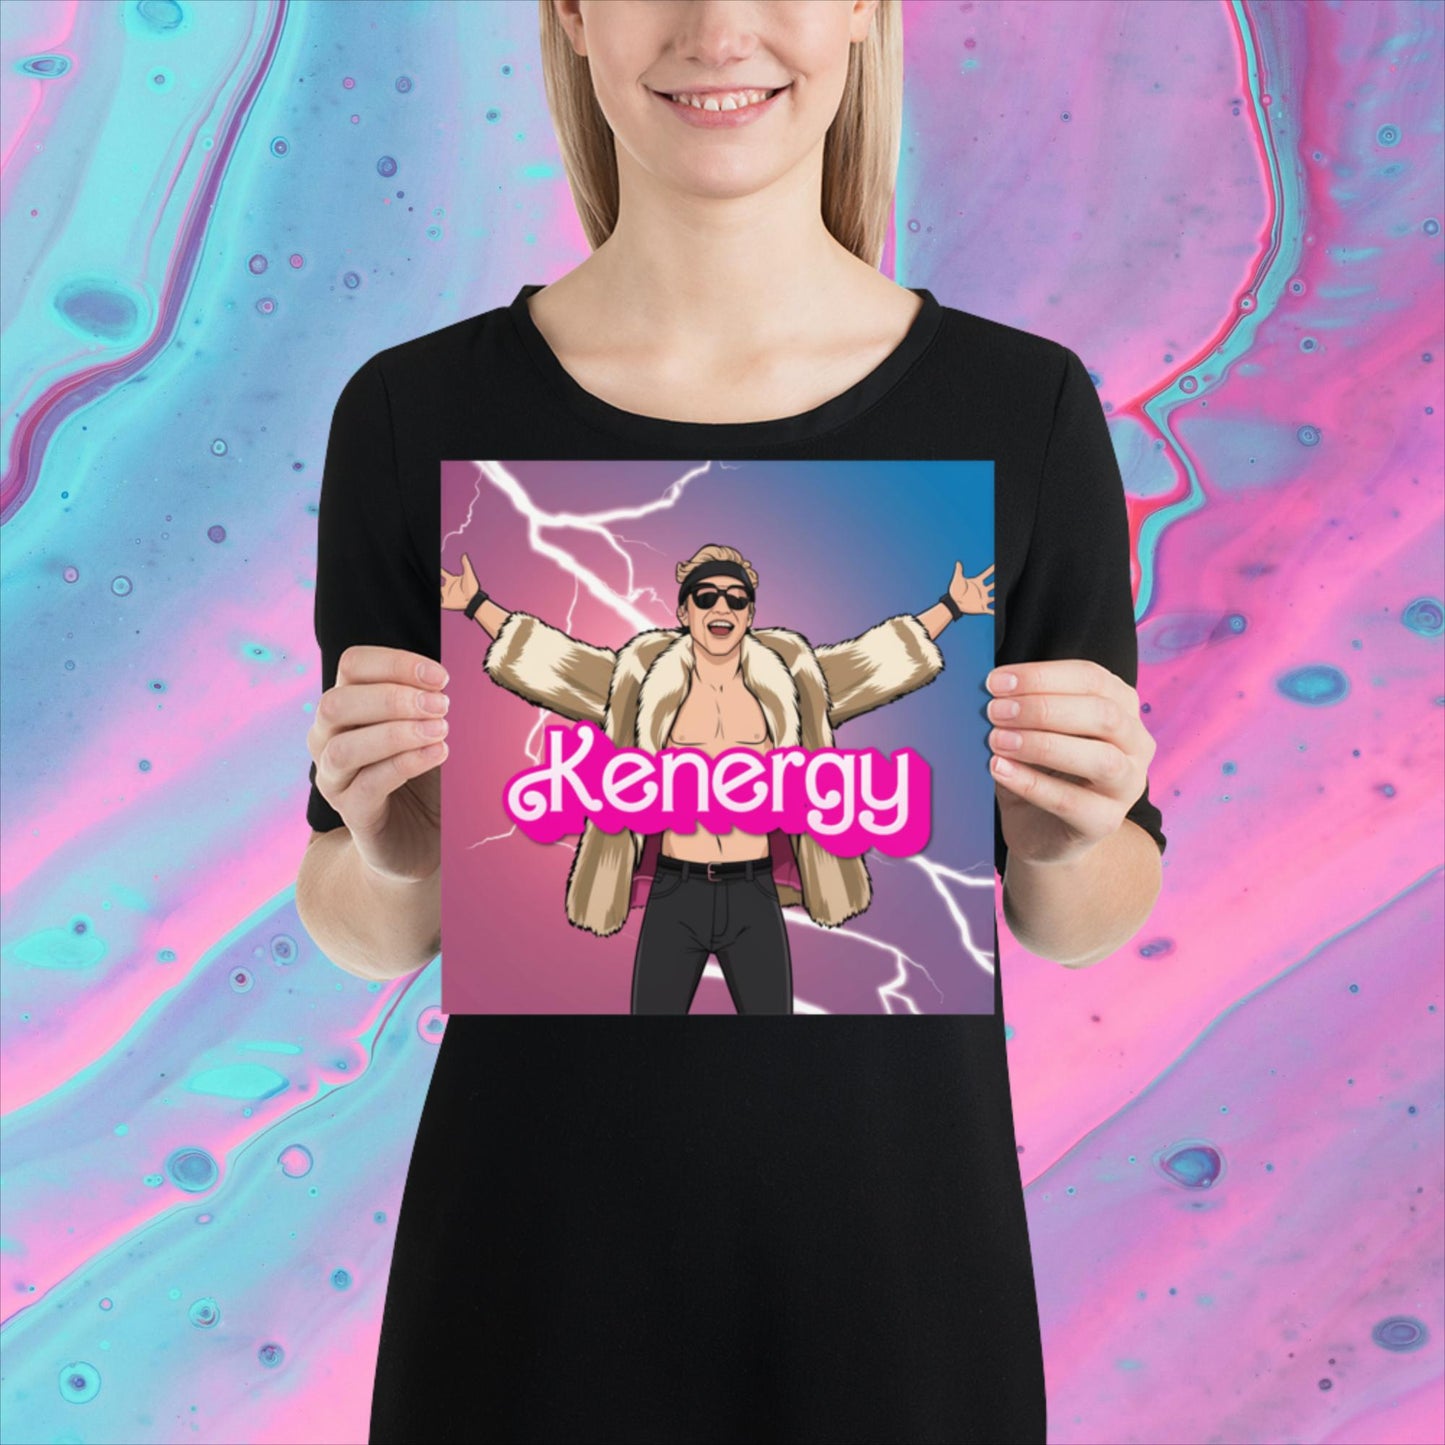 Kenergy Barbie Ryan Gosling Ken Poster Next Cult Brand Barbie, Ken, Kenergy, Movies, Ryan Gosling